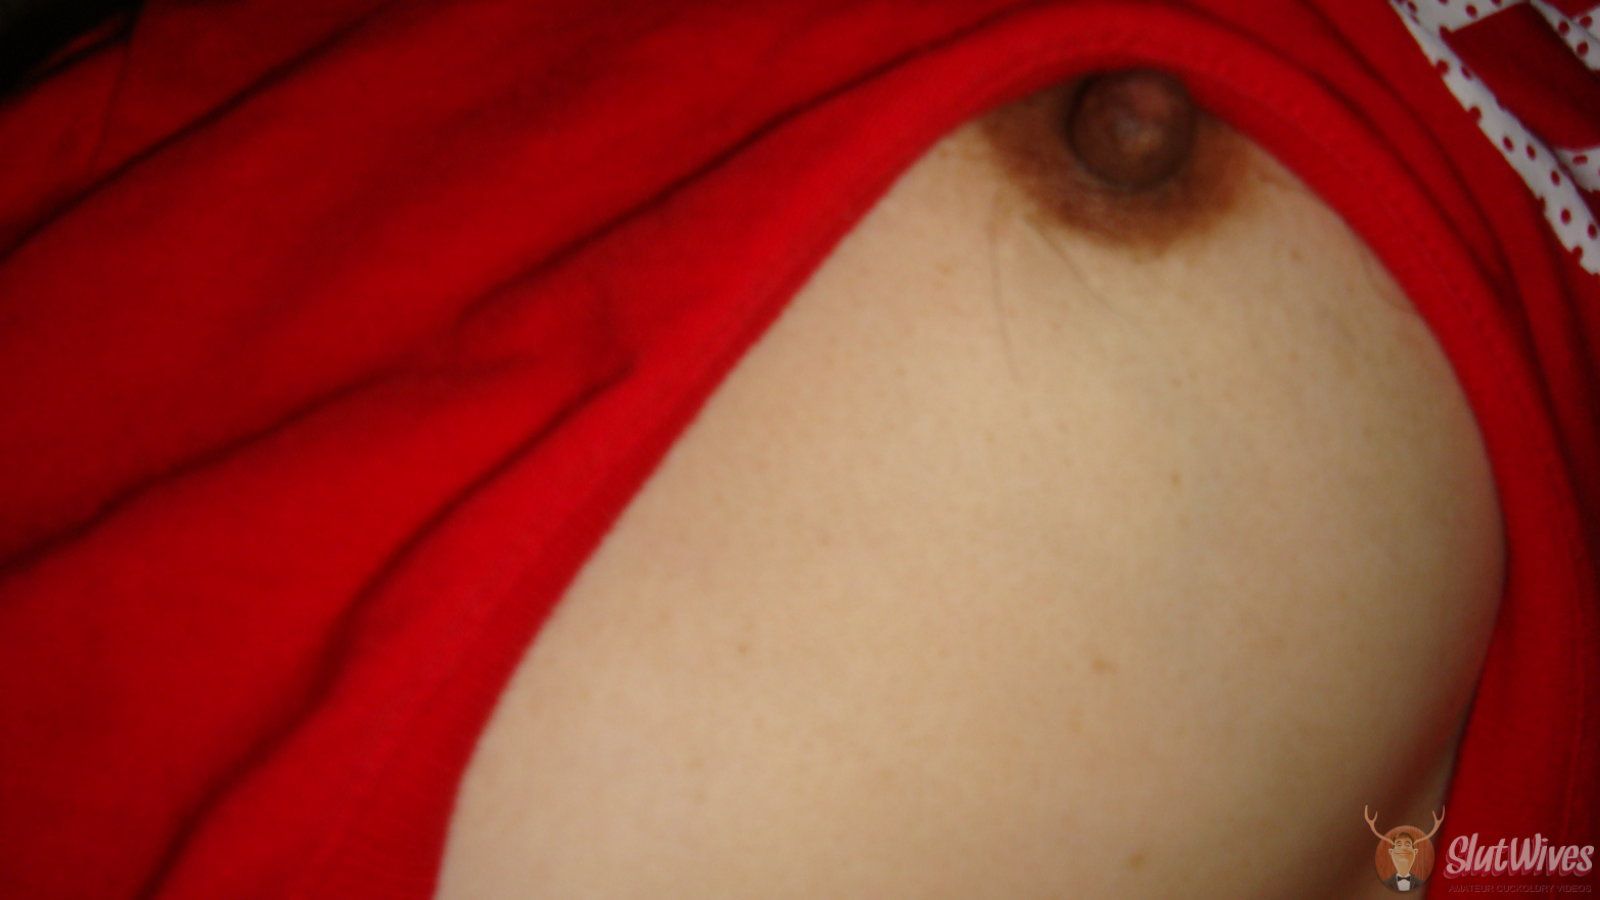 Her erected nipple